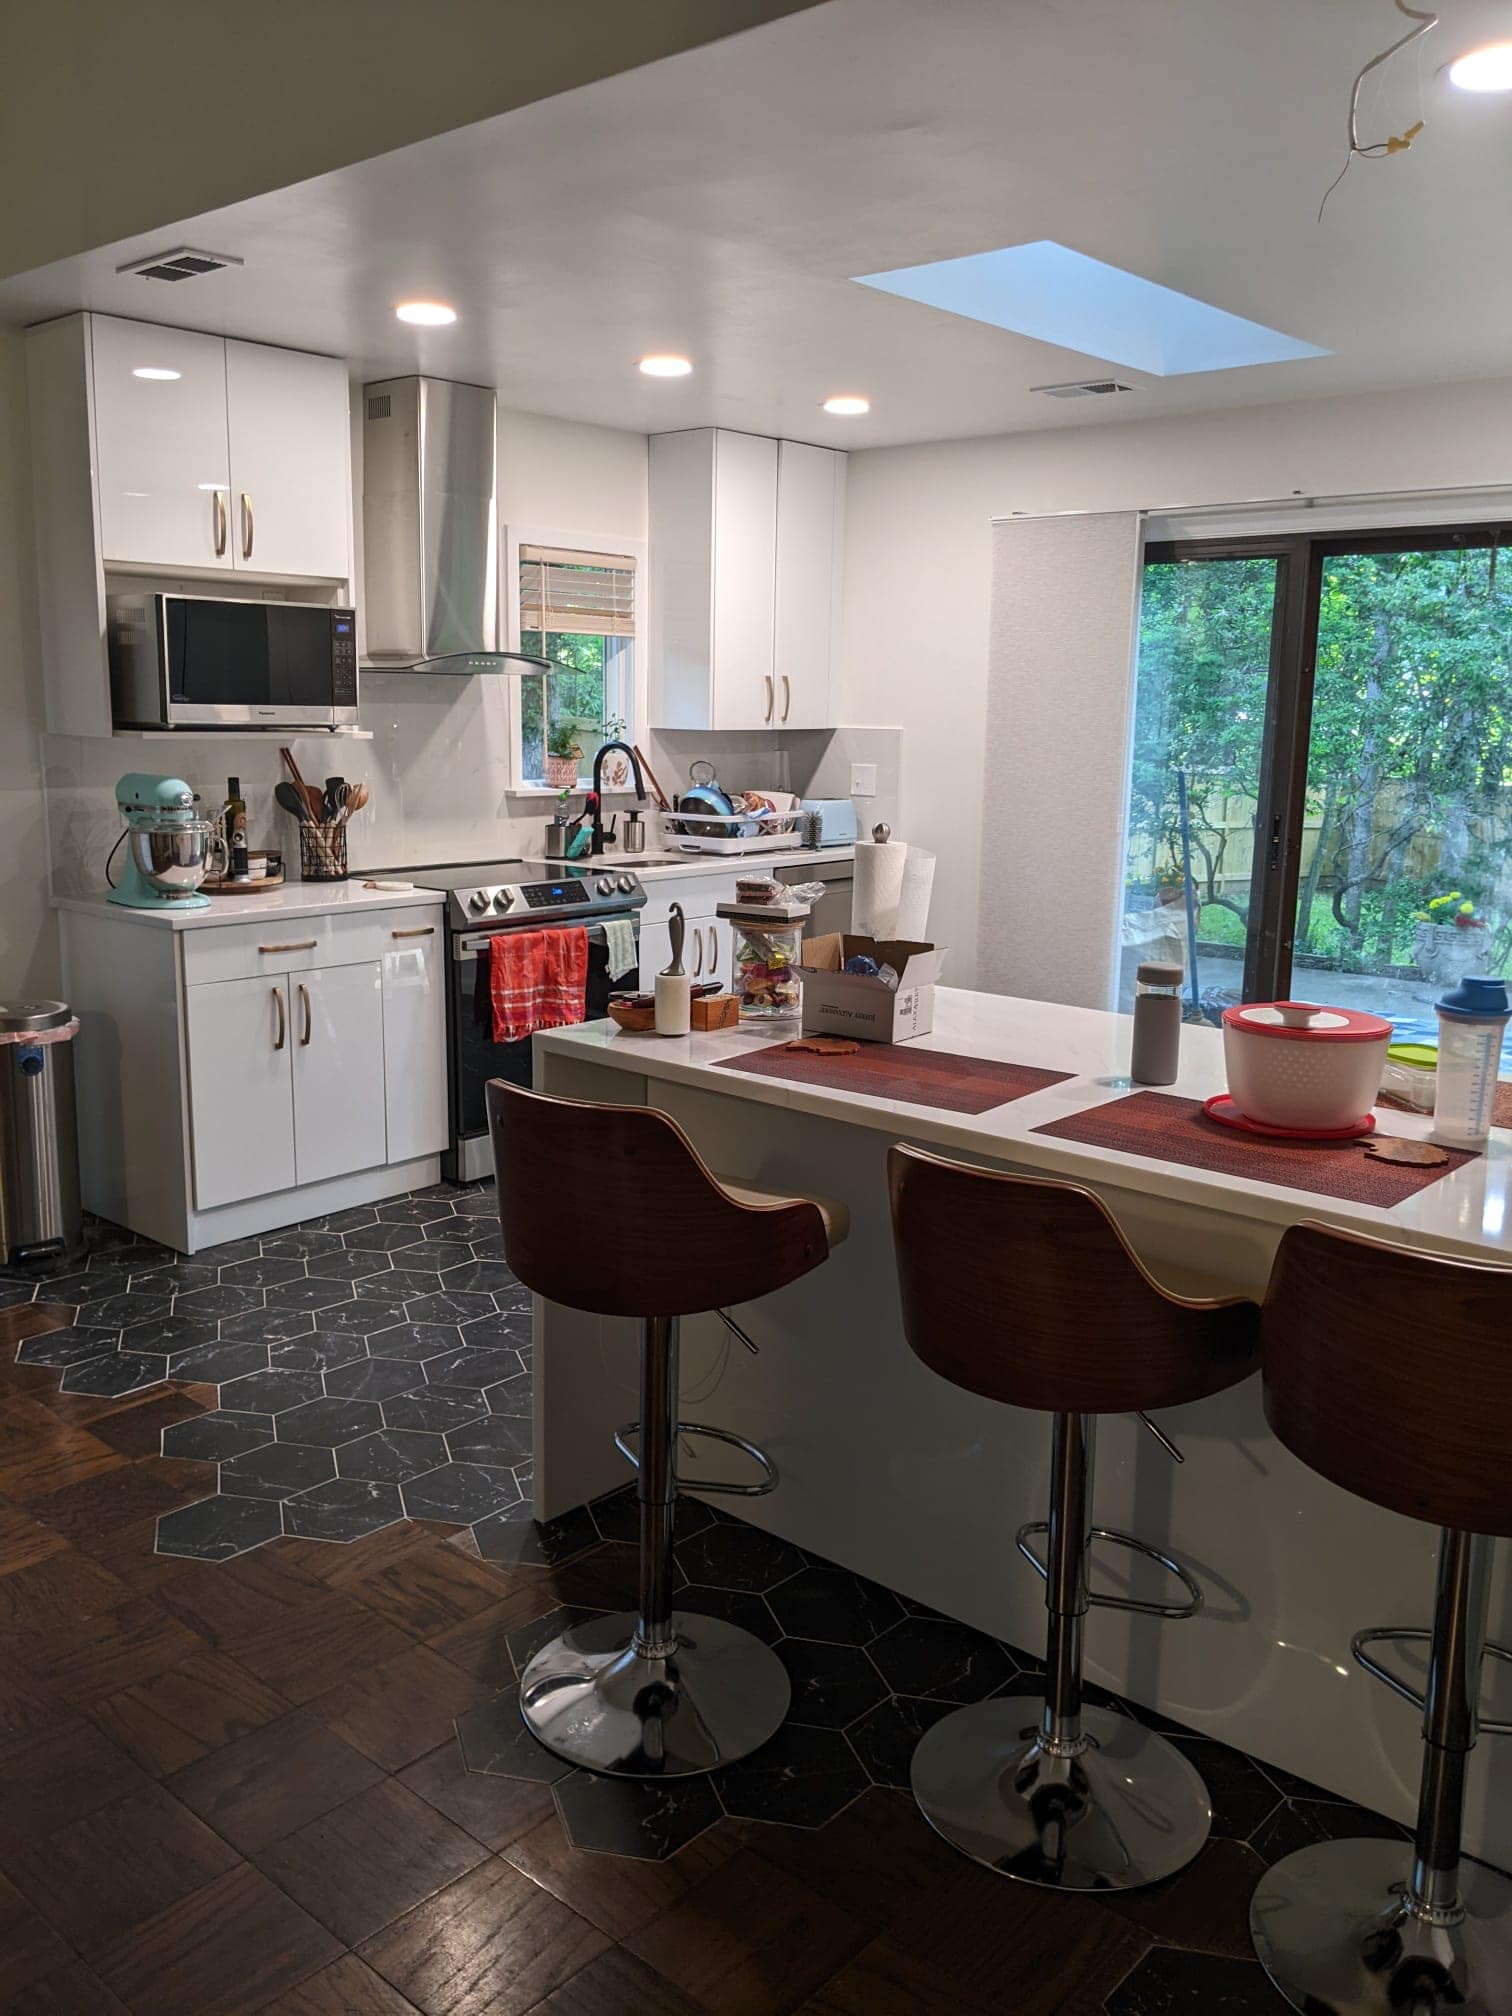 Home Design Inc - Fairfax, VA, US, kitchen design